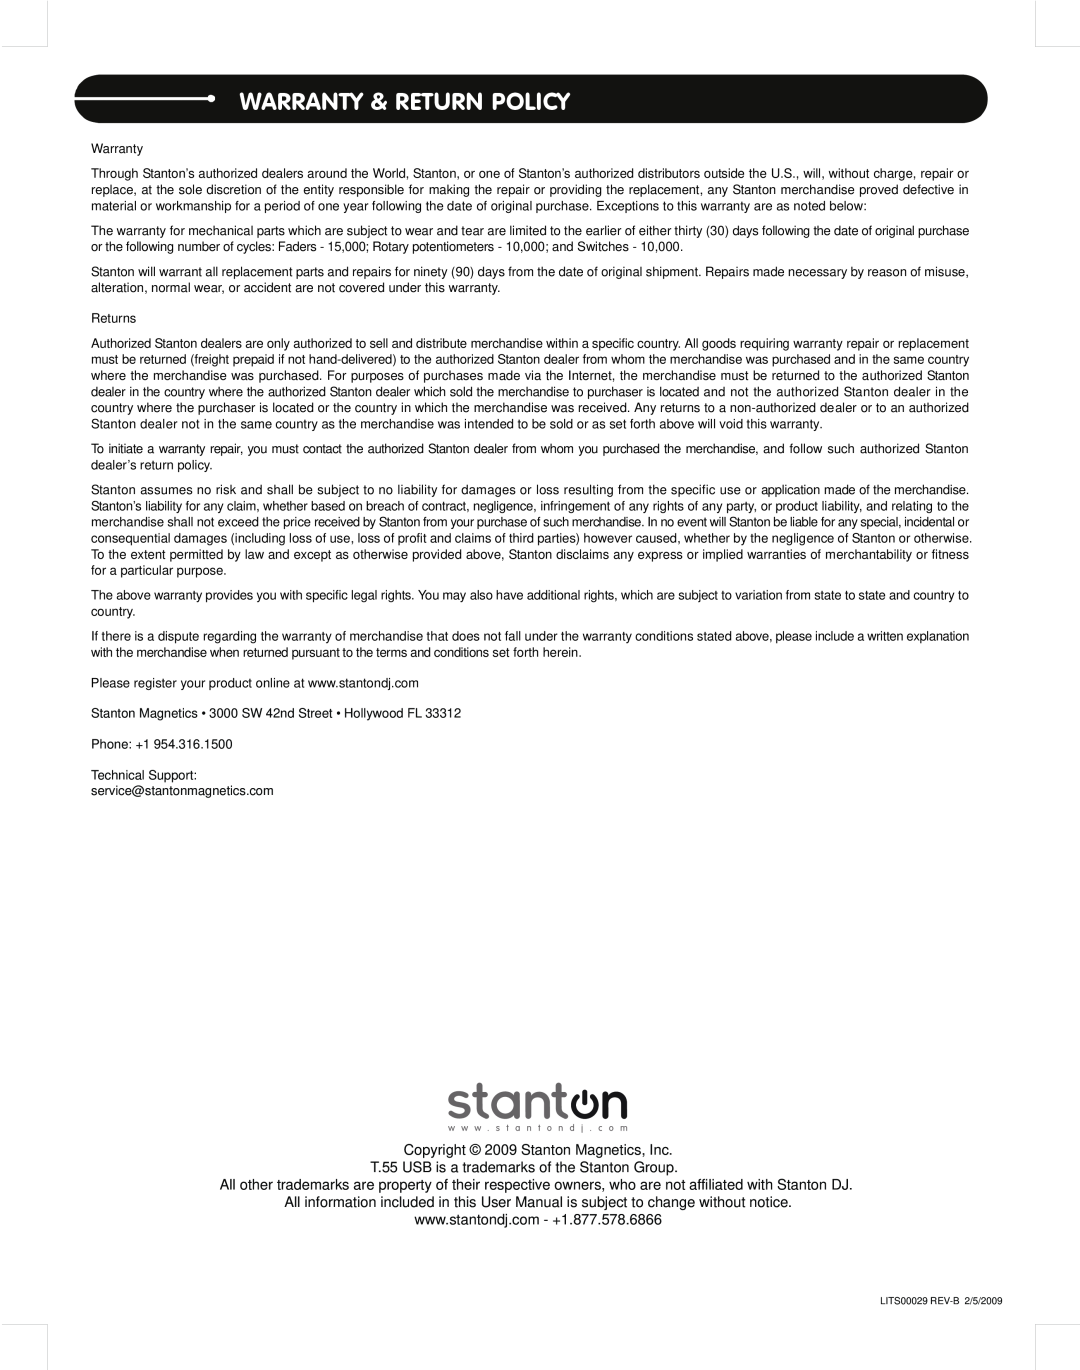 Stanton T.55 USB manual Warranty & Return Policy, Copyright 2009 Stanton Magnetics, Inc 